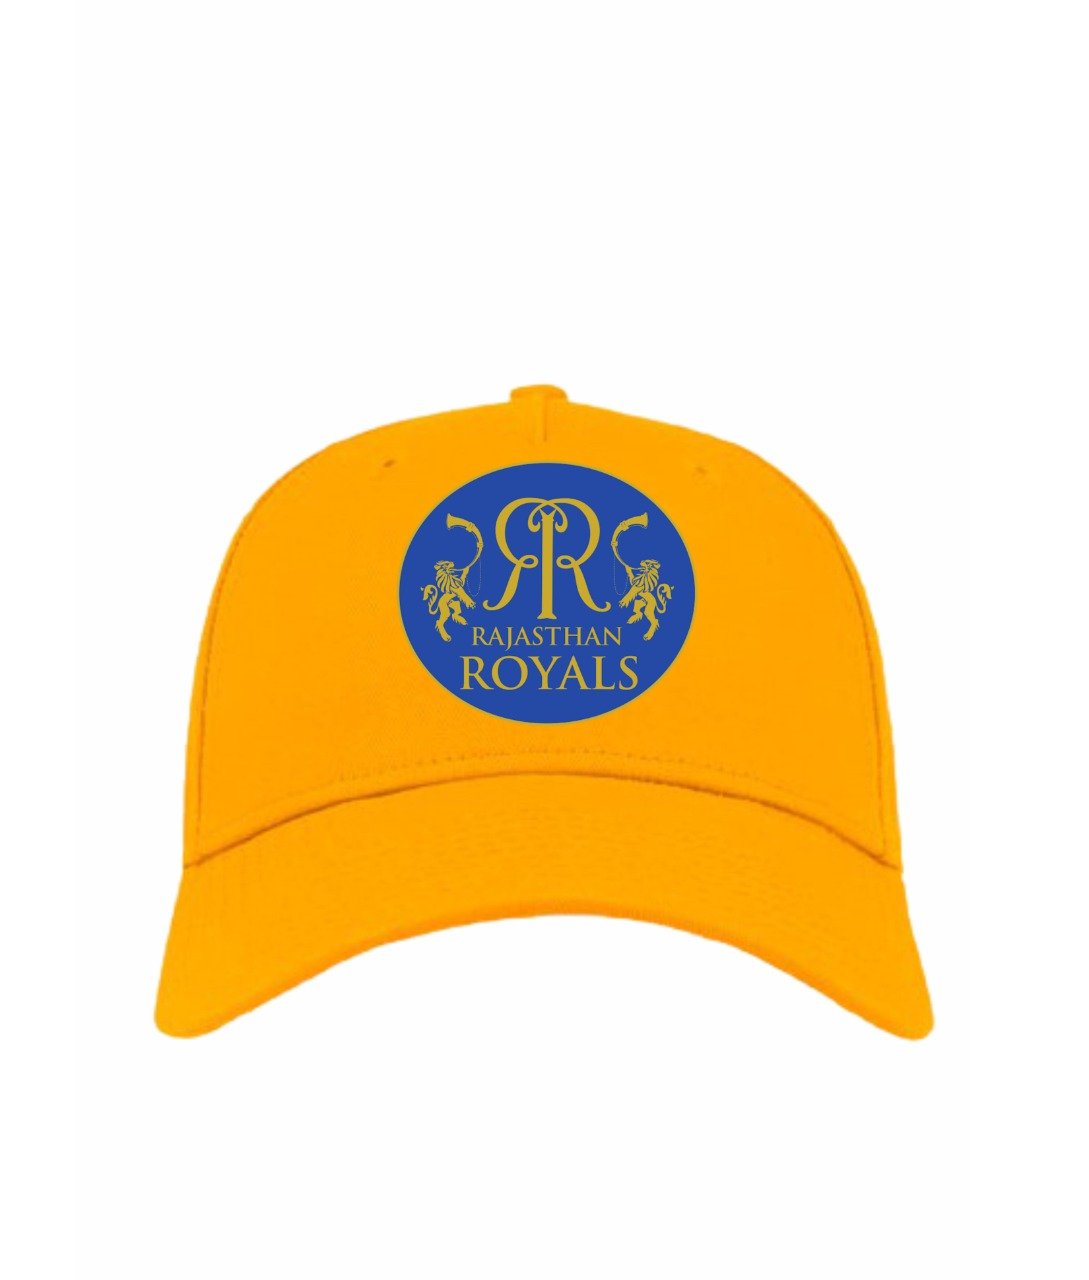 Rajasthan Royals Printed IPL Cap Yellow